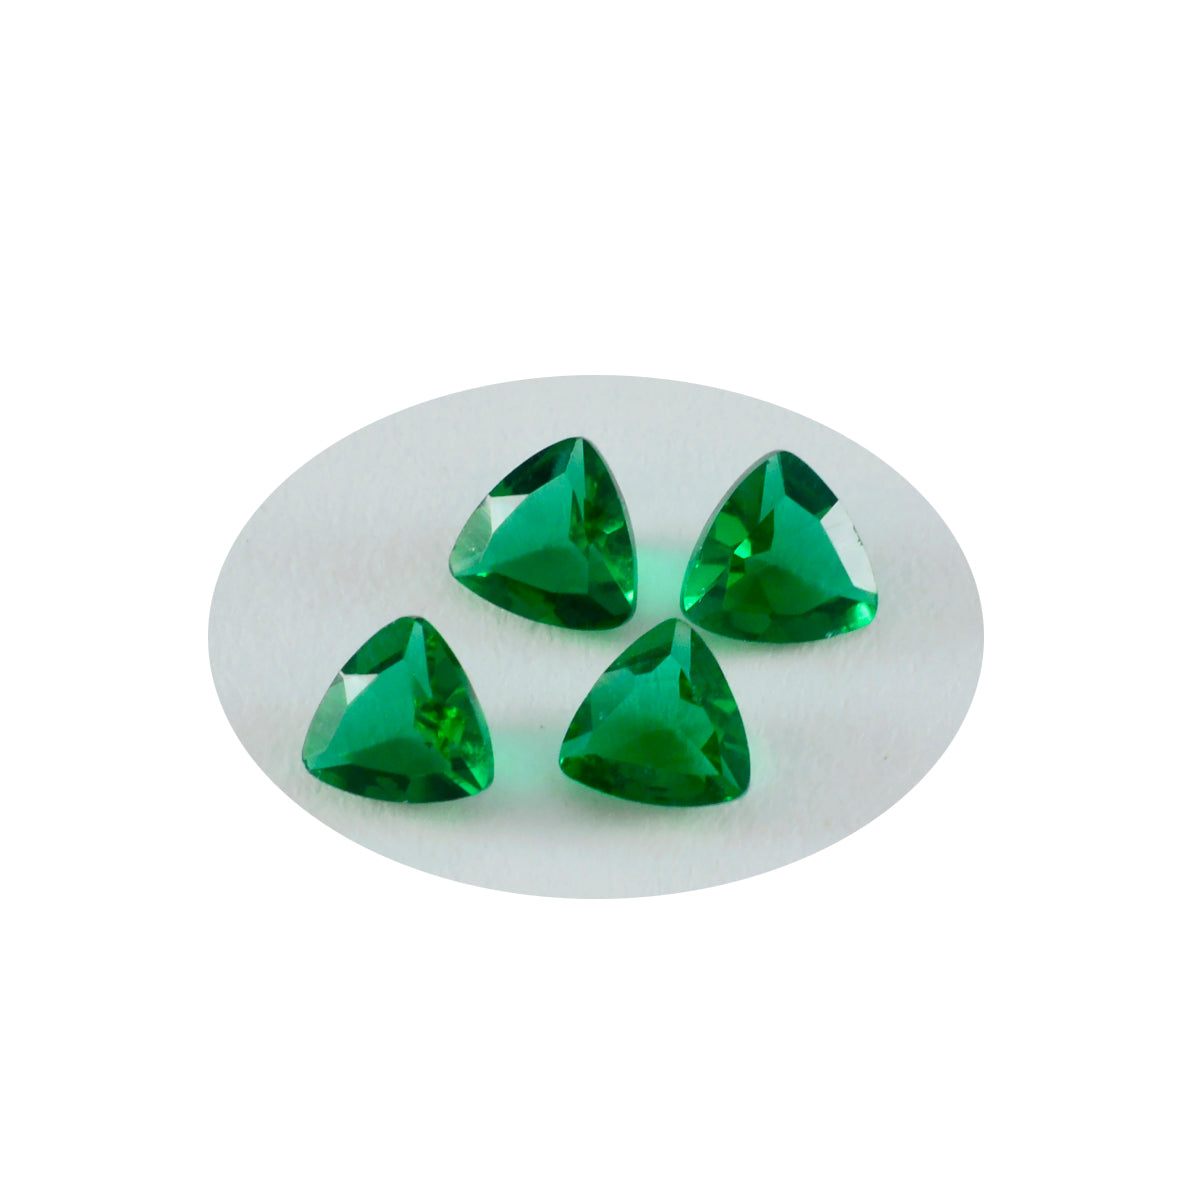 Riyogems 1PC Green Emerald CZ Faceted 8x8 mm Trillion Shape amazing Quality Loose Gems